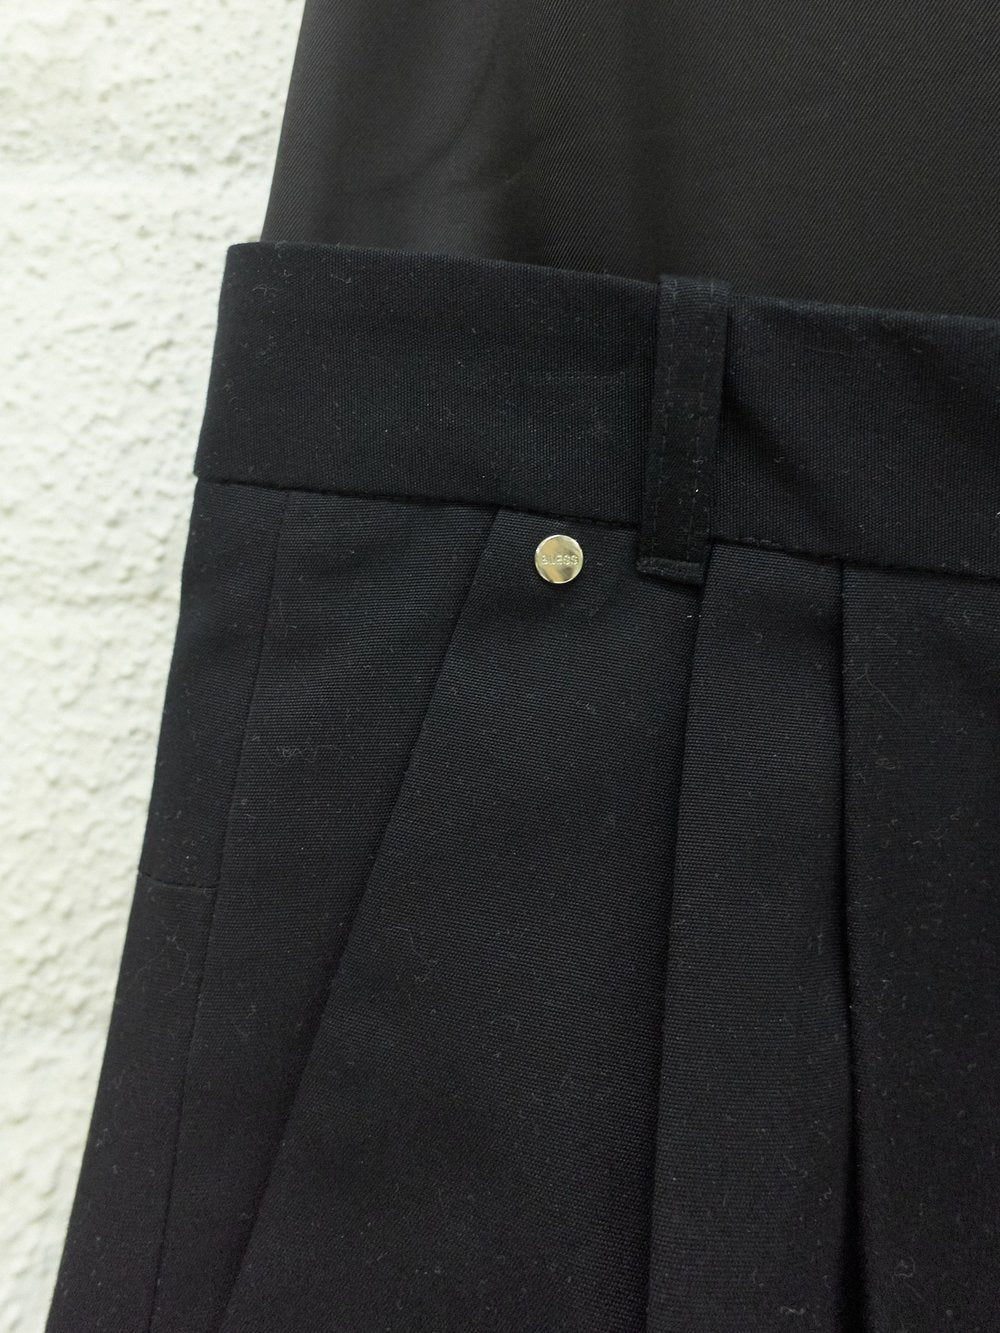 BLESS no. 49 "Alternarrative" / 2013 black tube top panel shorts - mens S M